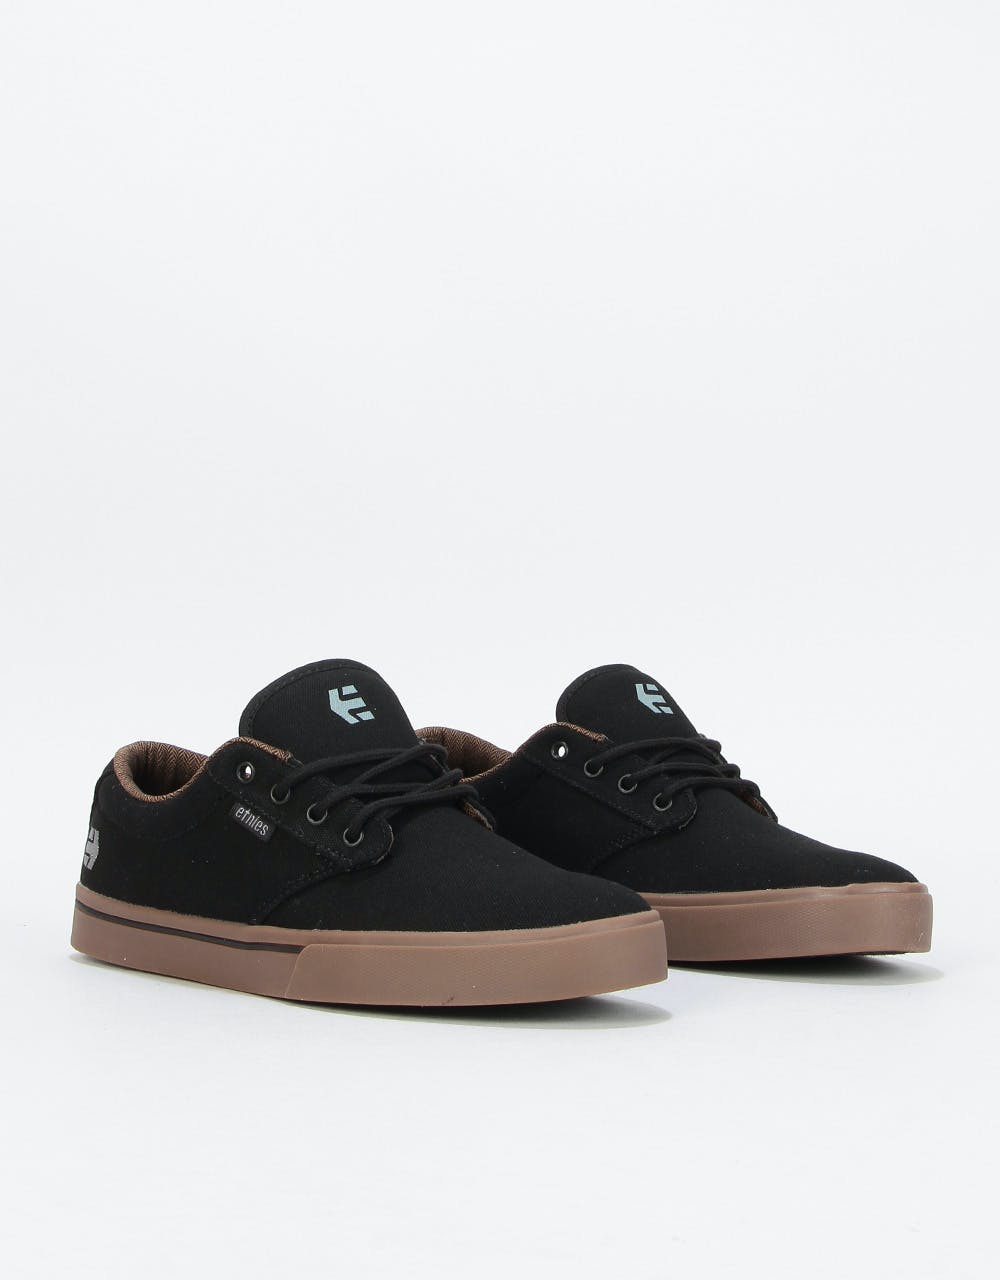 Etnies Jameson 2 Eco Skate Shoes - Black/Charcoal/Gum